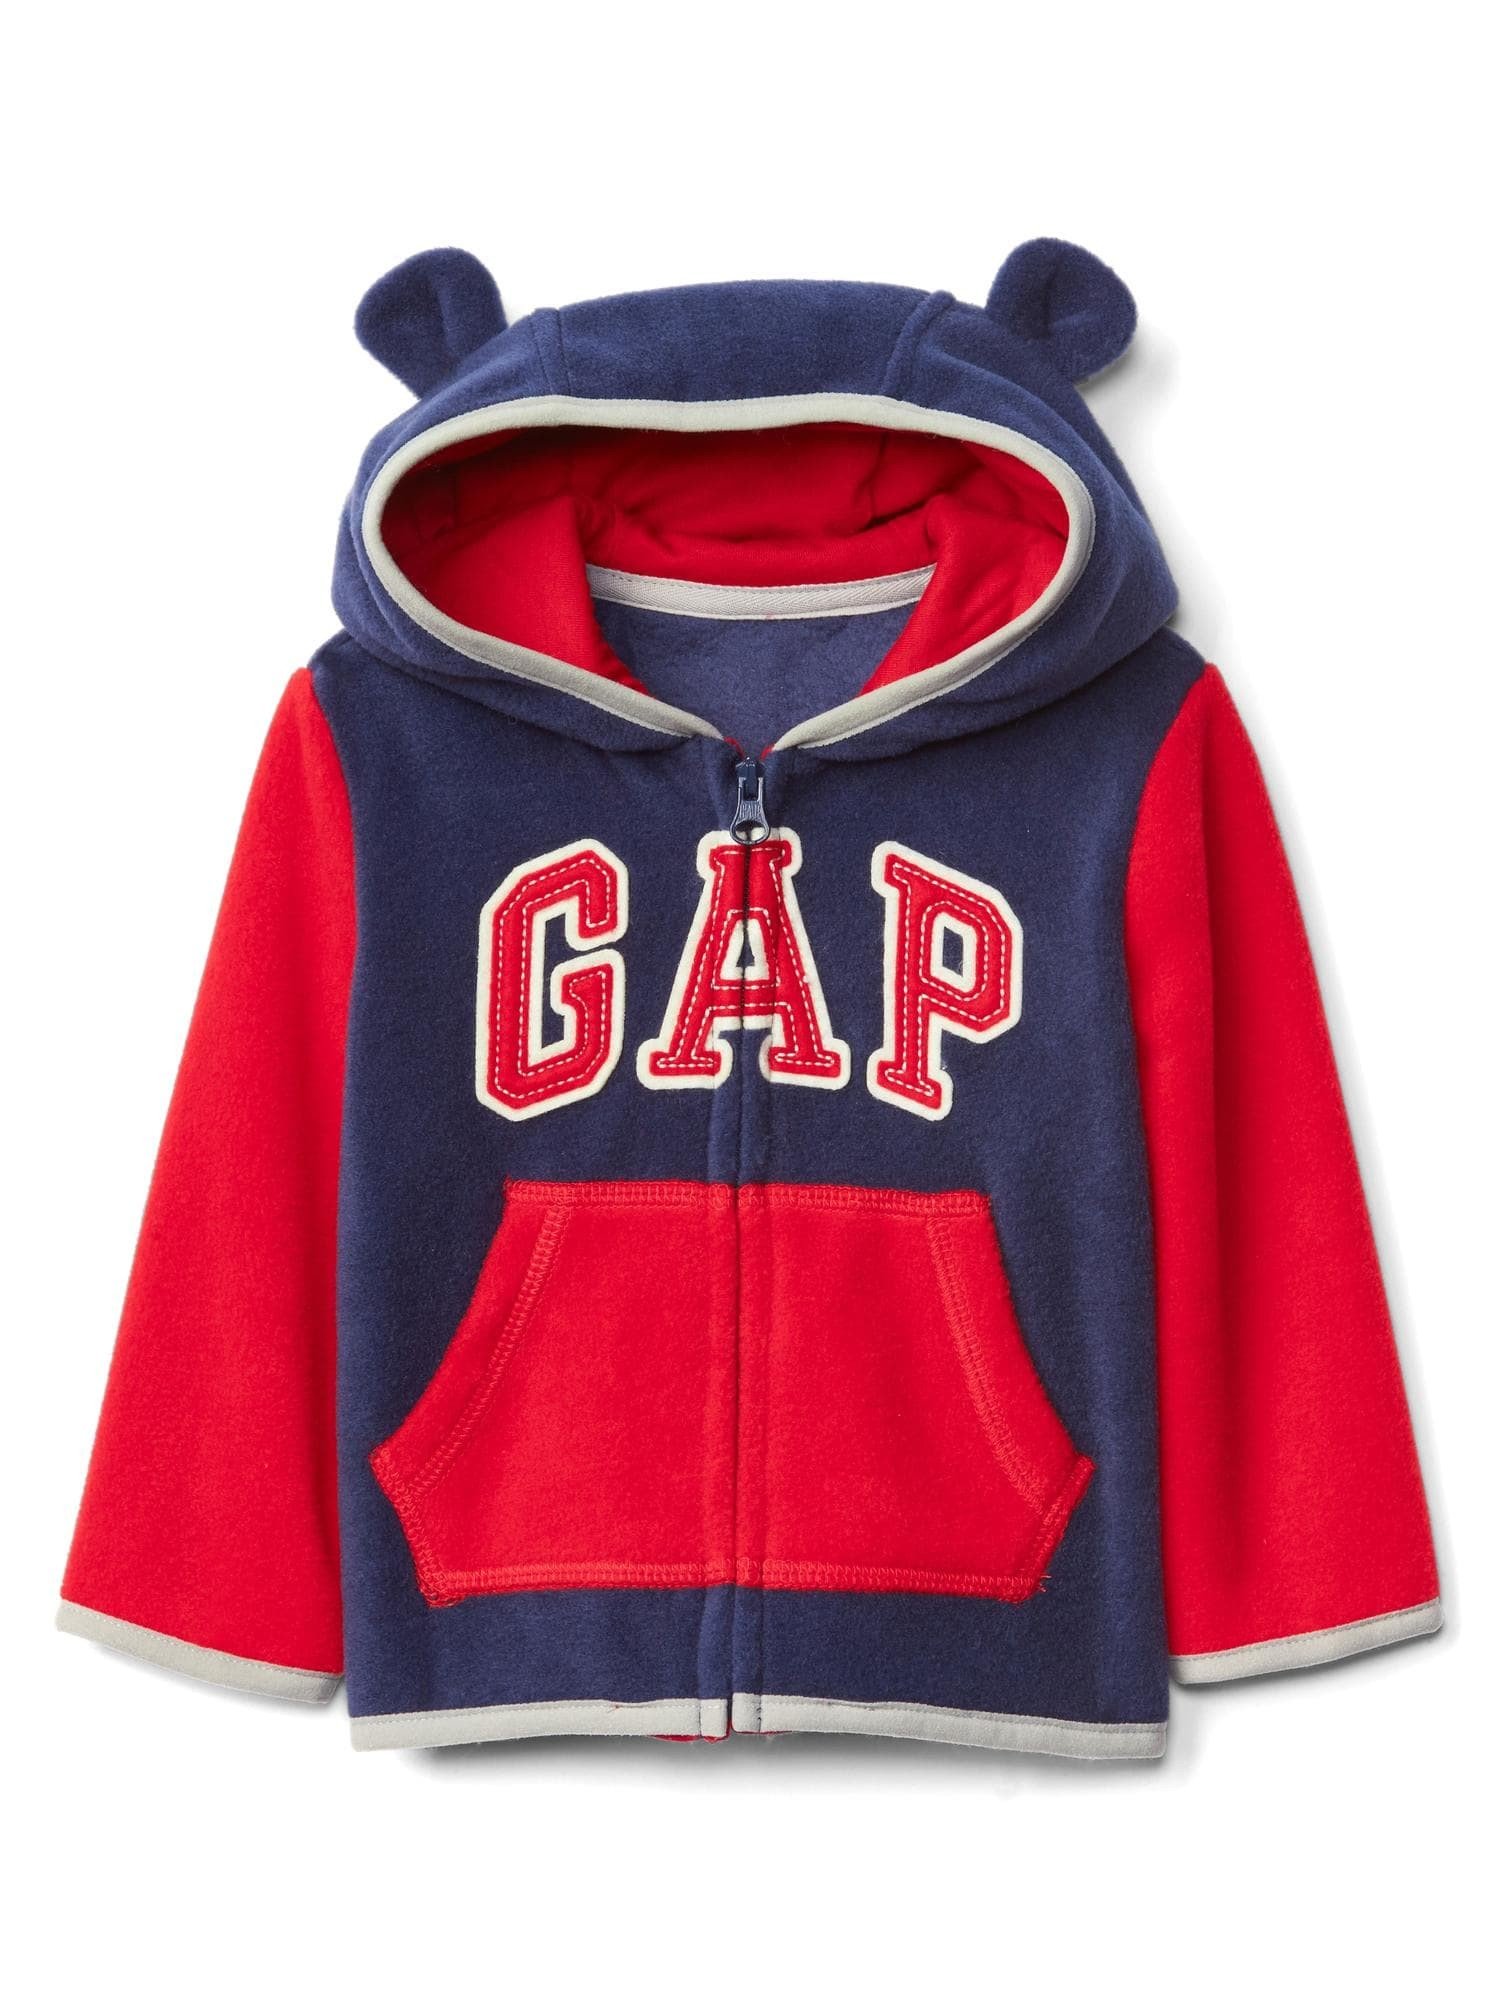 Pro Fleece Gap Logo ayıcık sweatshirt product image